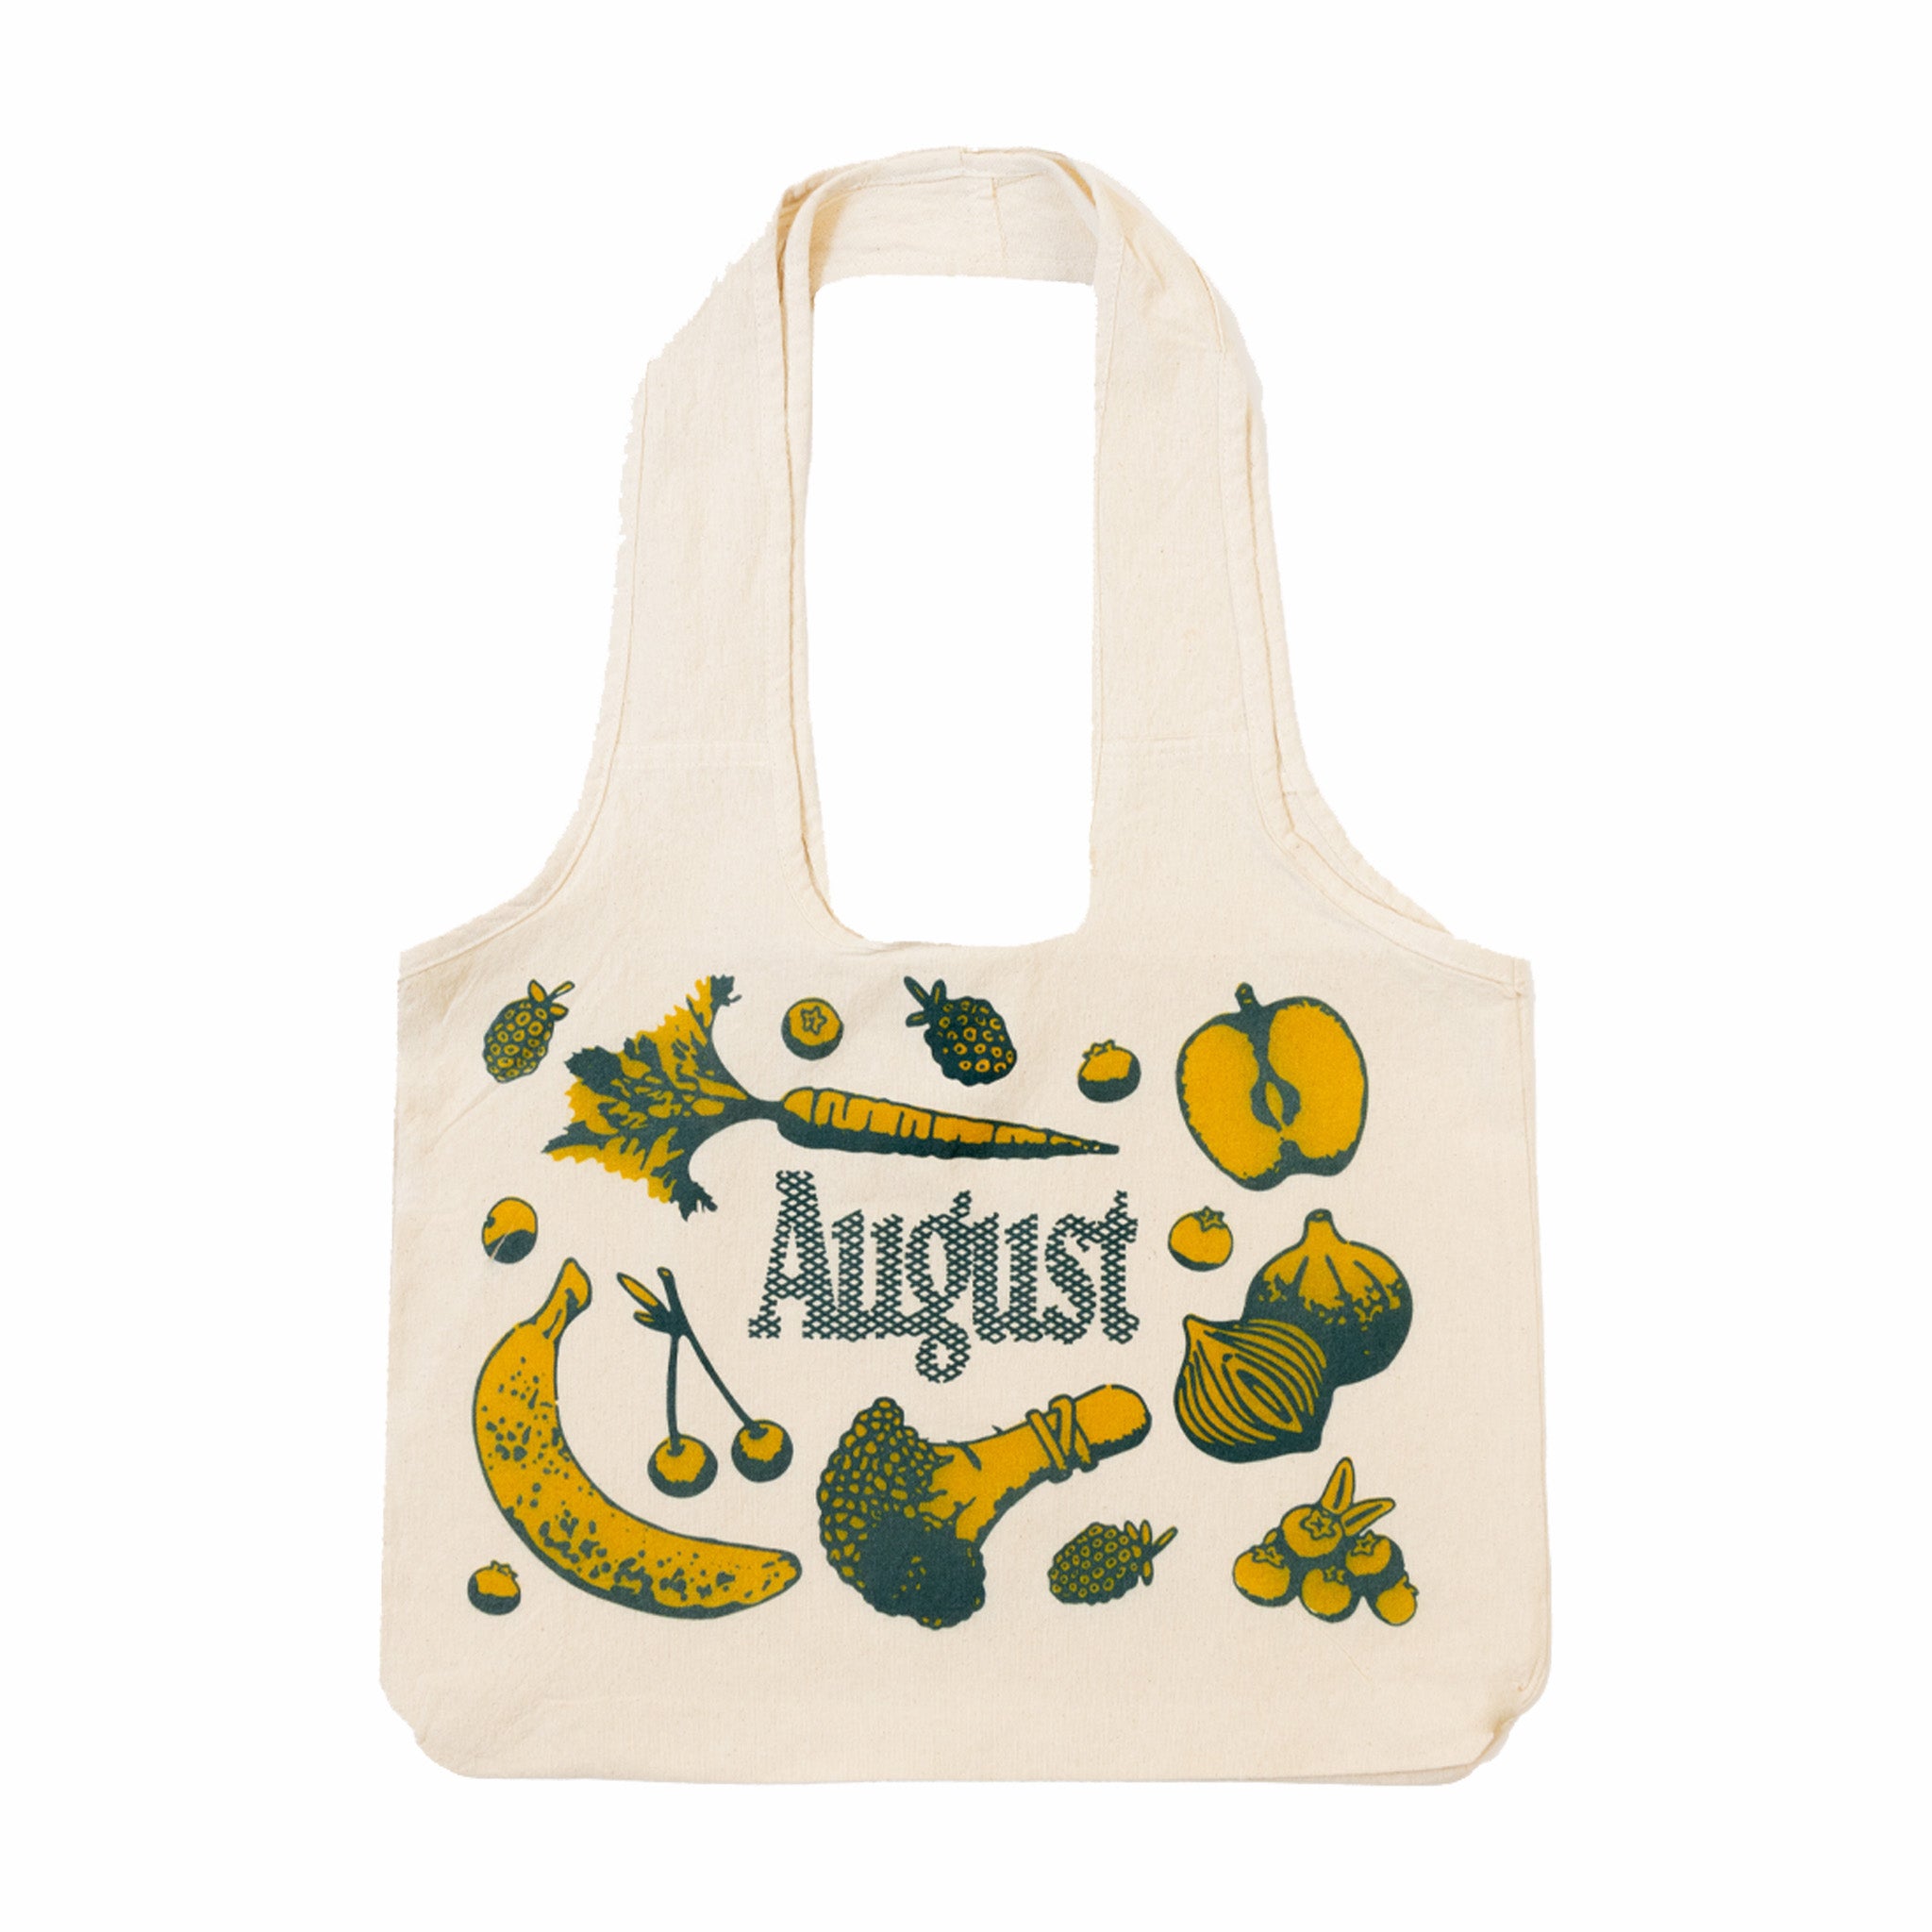 Agosto, August "Fresh Produce" Borsa in tela (naturale-giallo-verde)